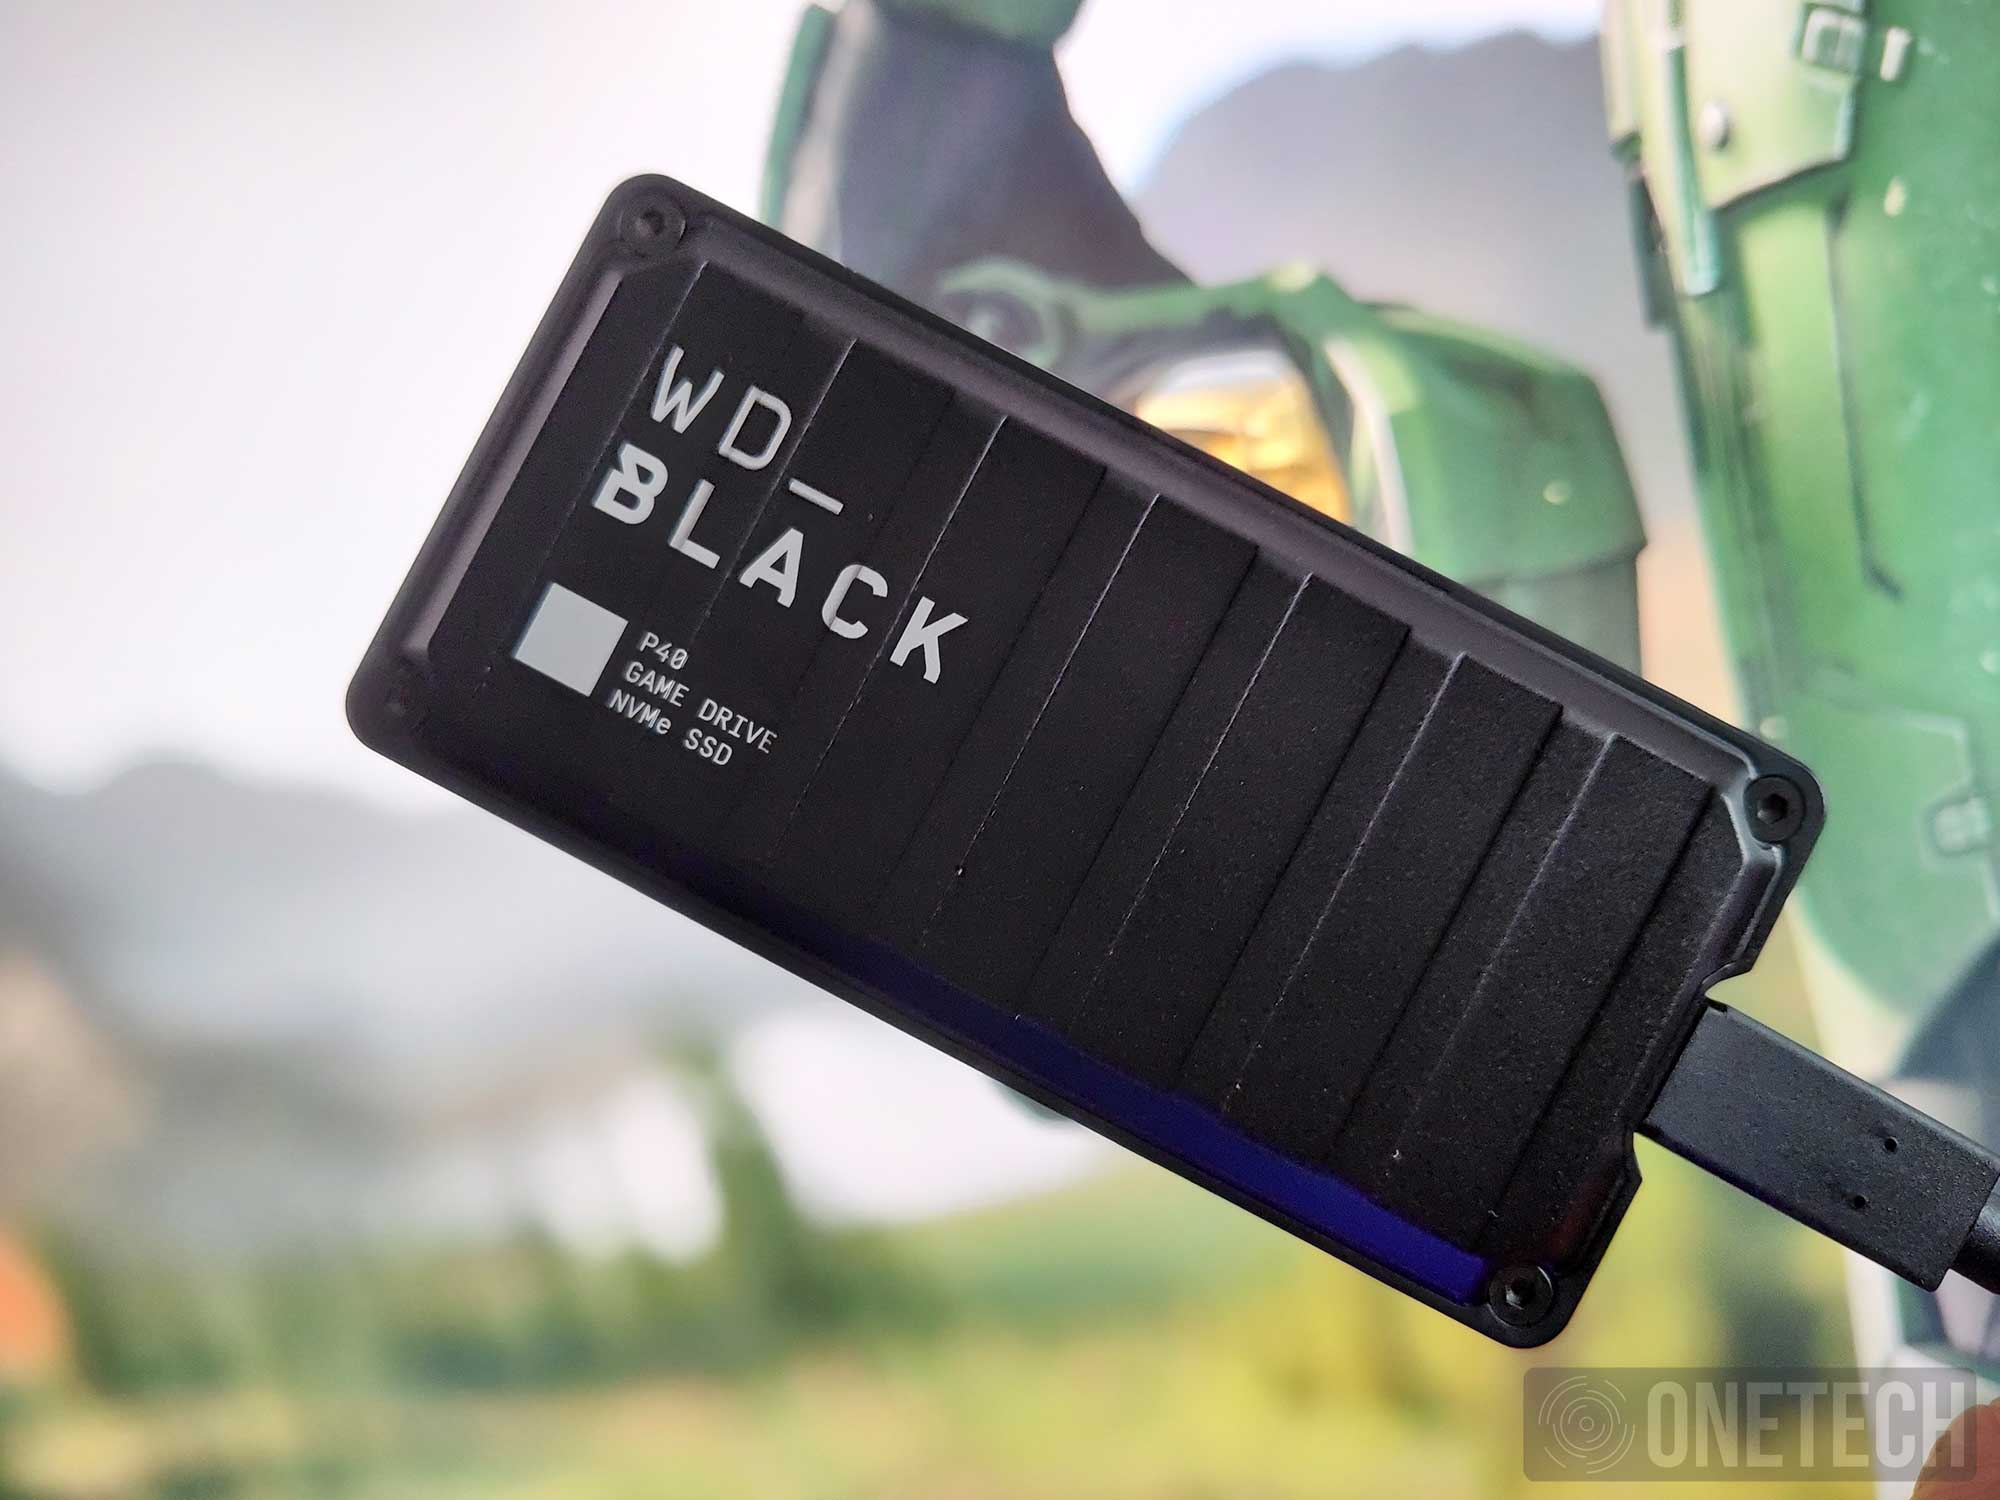 WD BLACK P40 Game Drive, SSD externo con RGB - Análisis 5